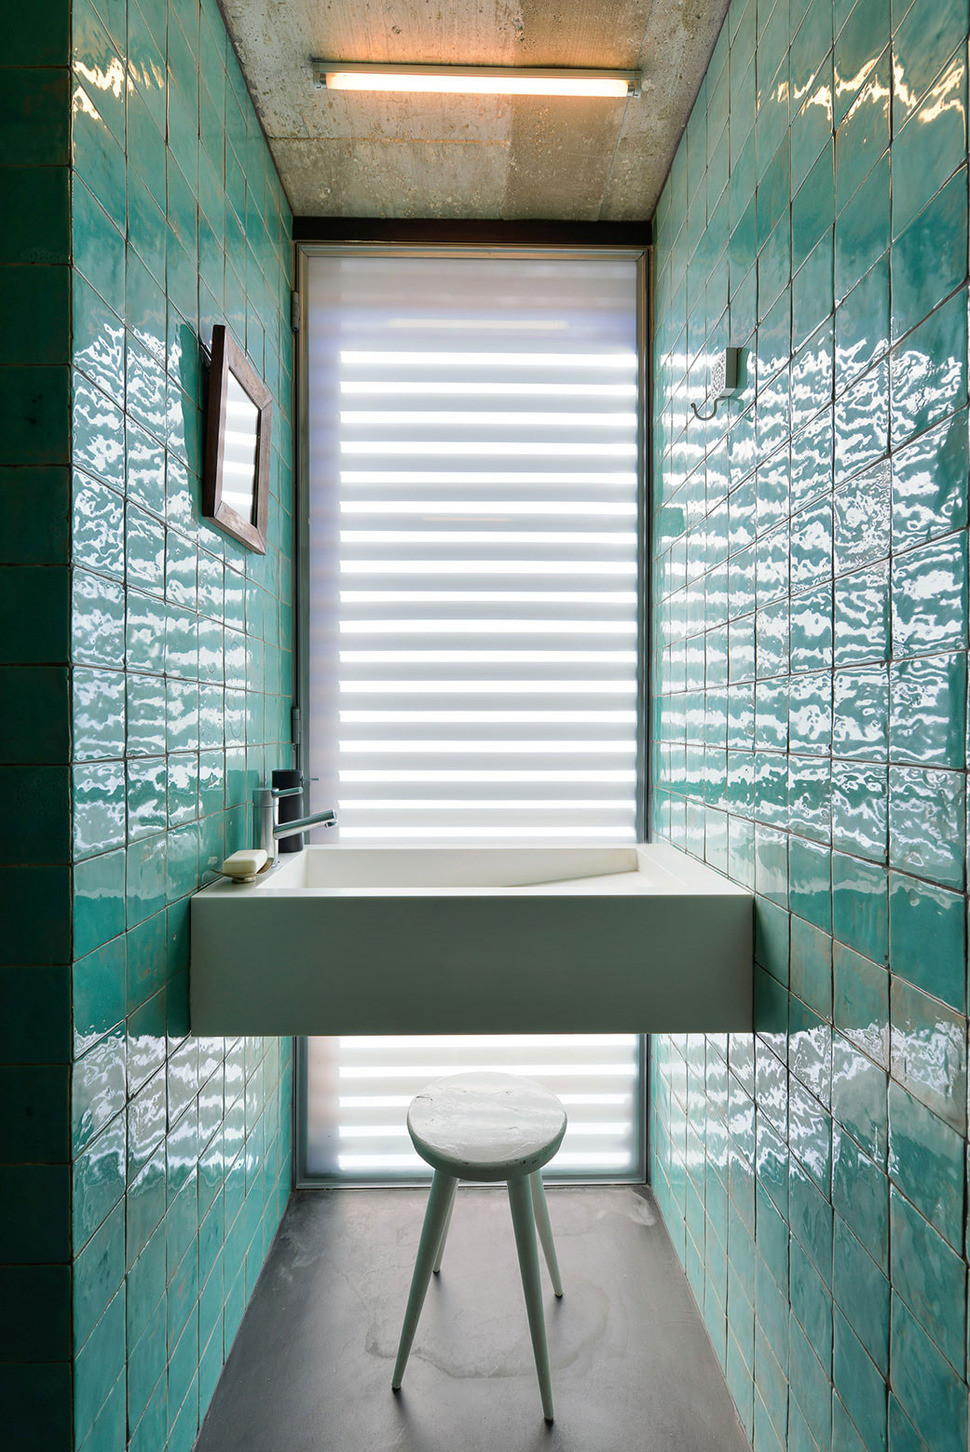 Tile Designs For Bathrooms
 Top 10 Tile Design Ideas for a Modern Bathroom for 2015